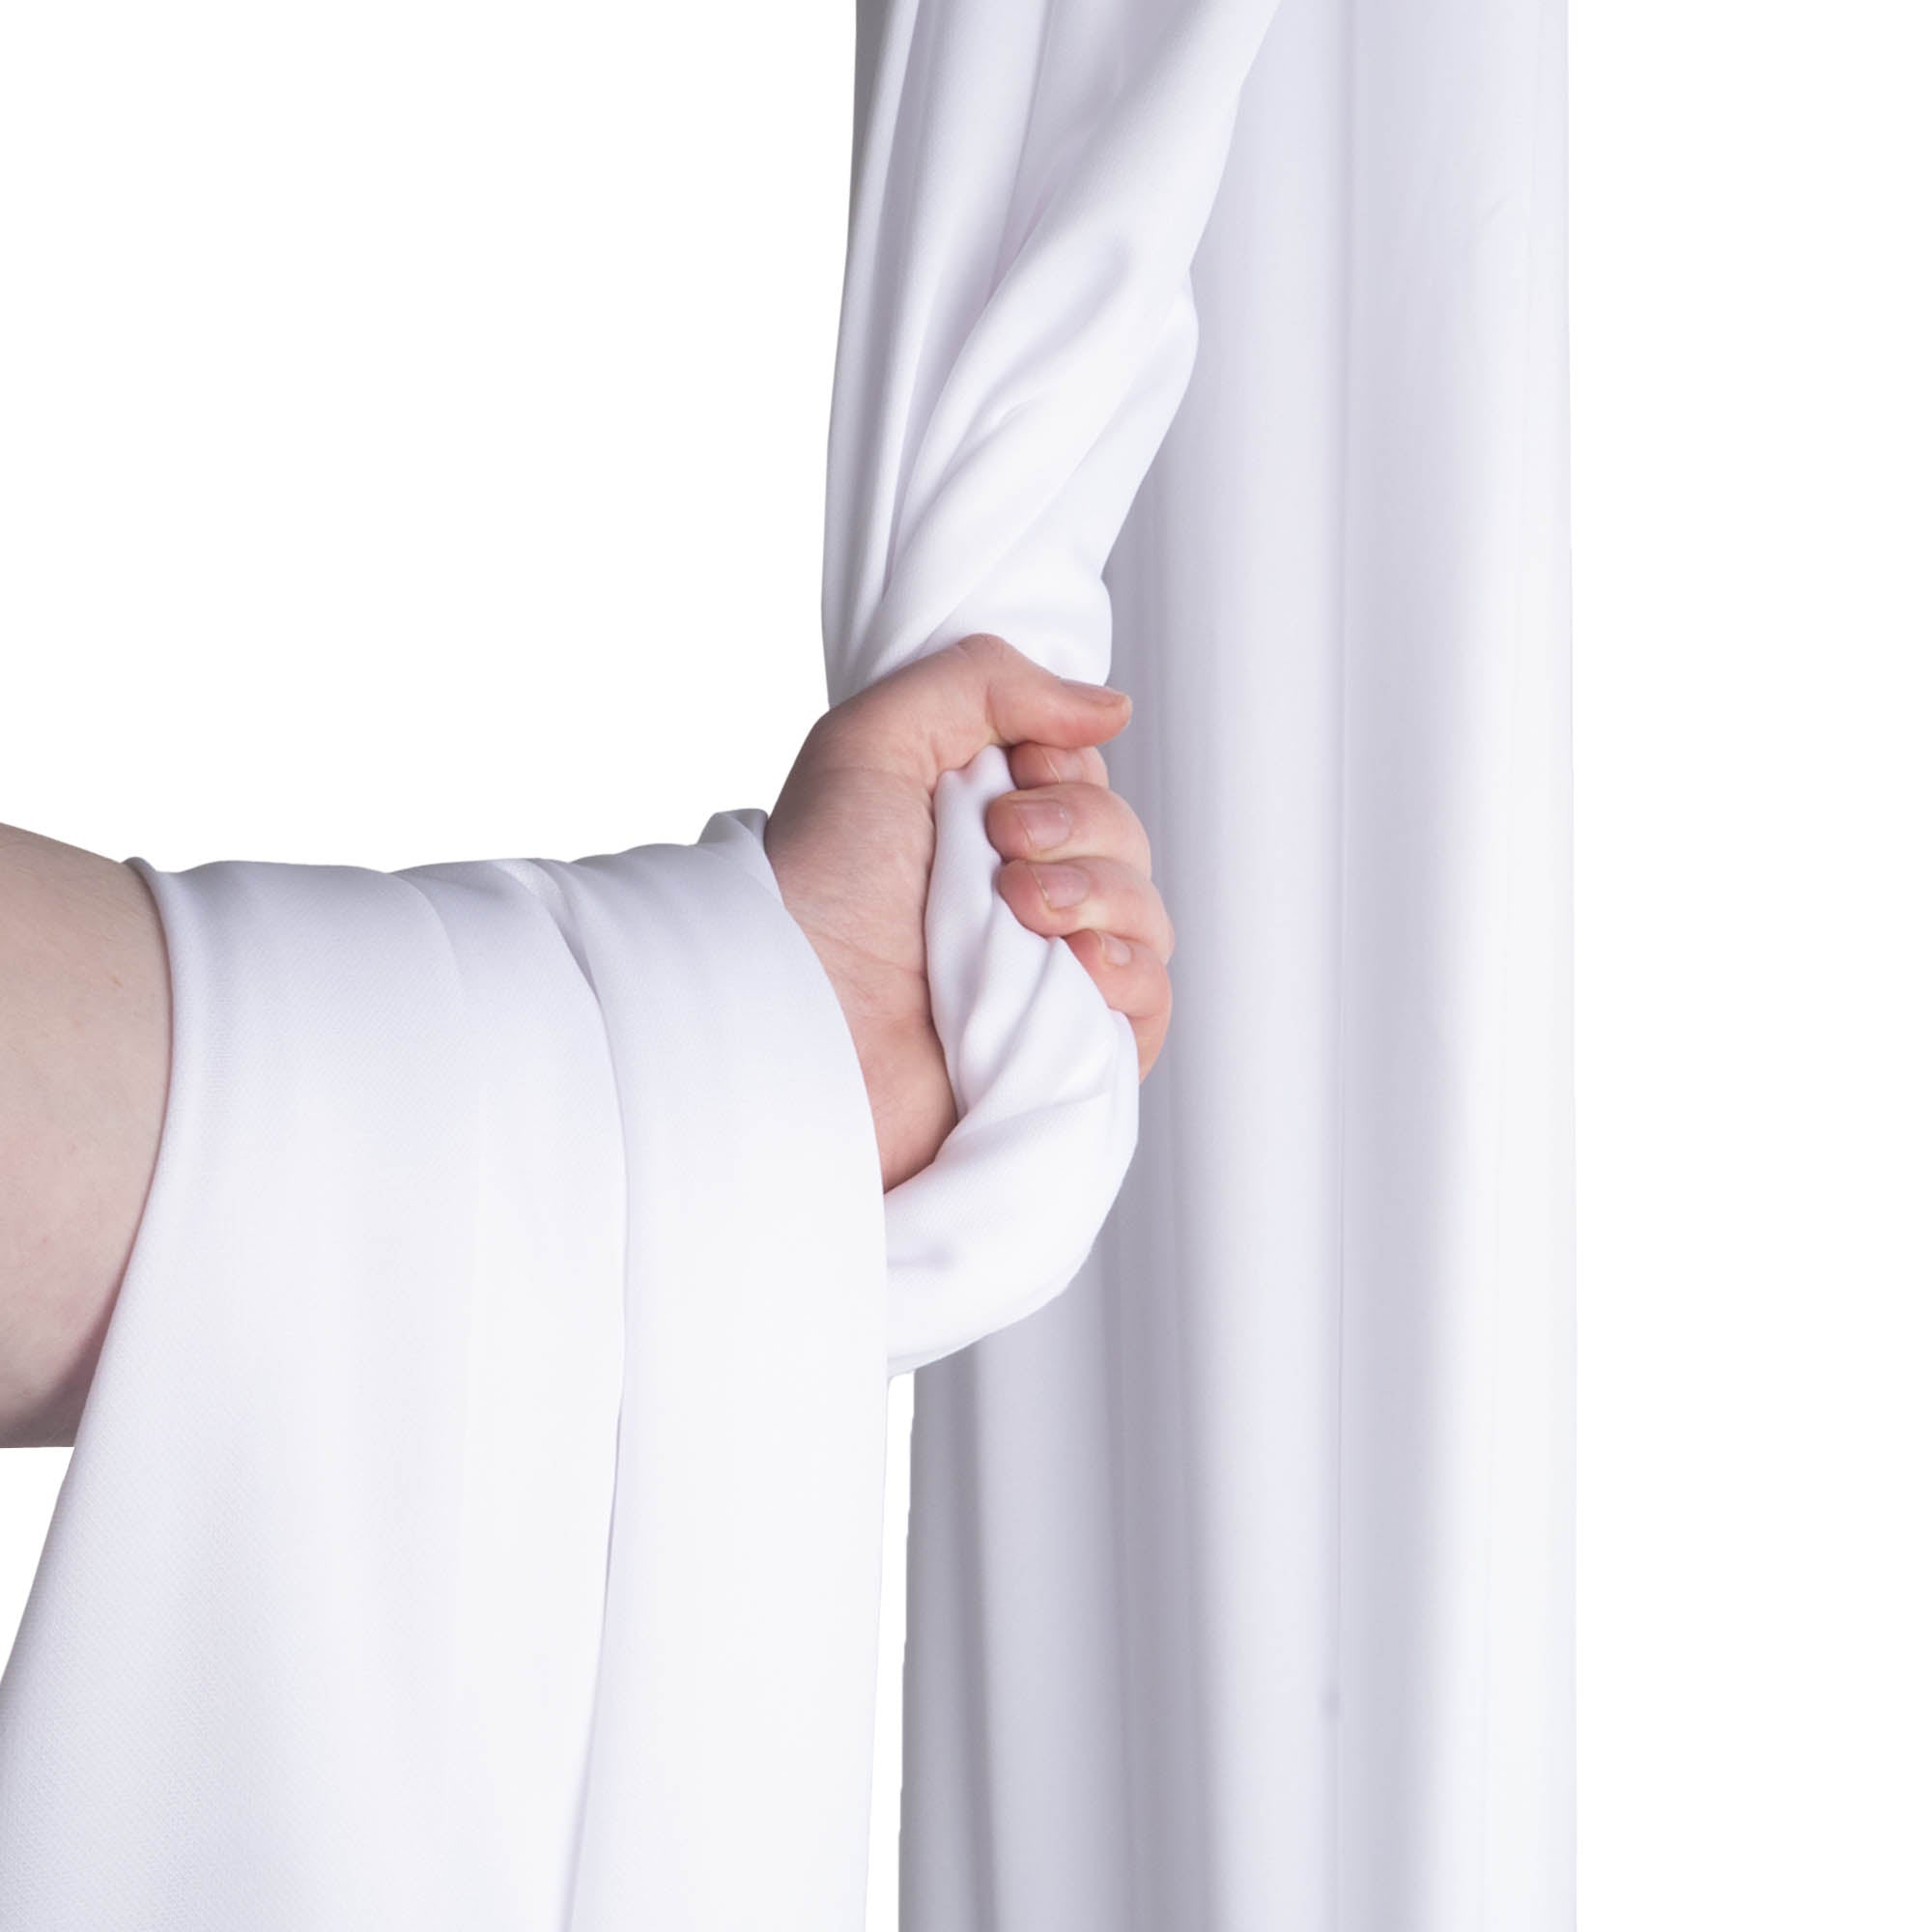 White silk wrapped around hand